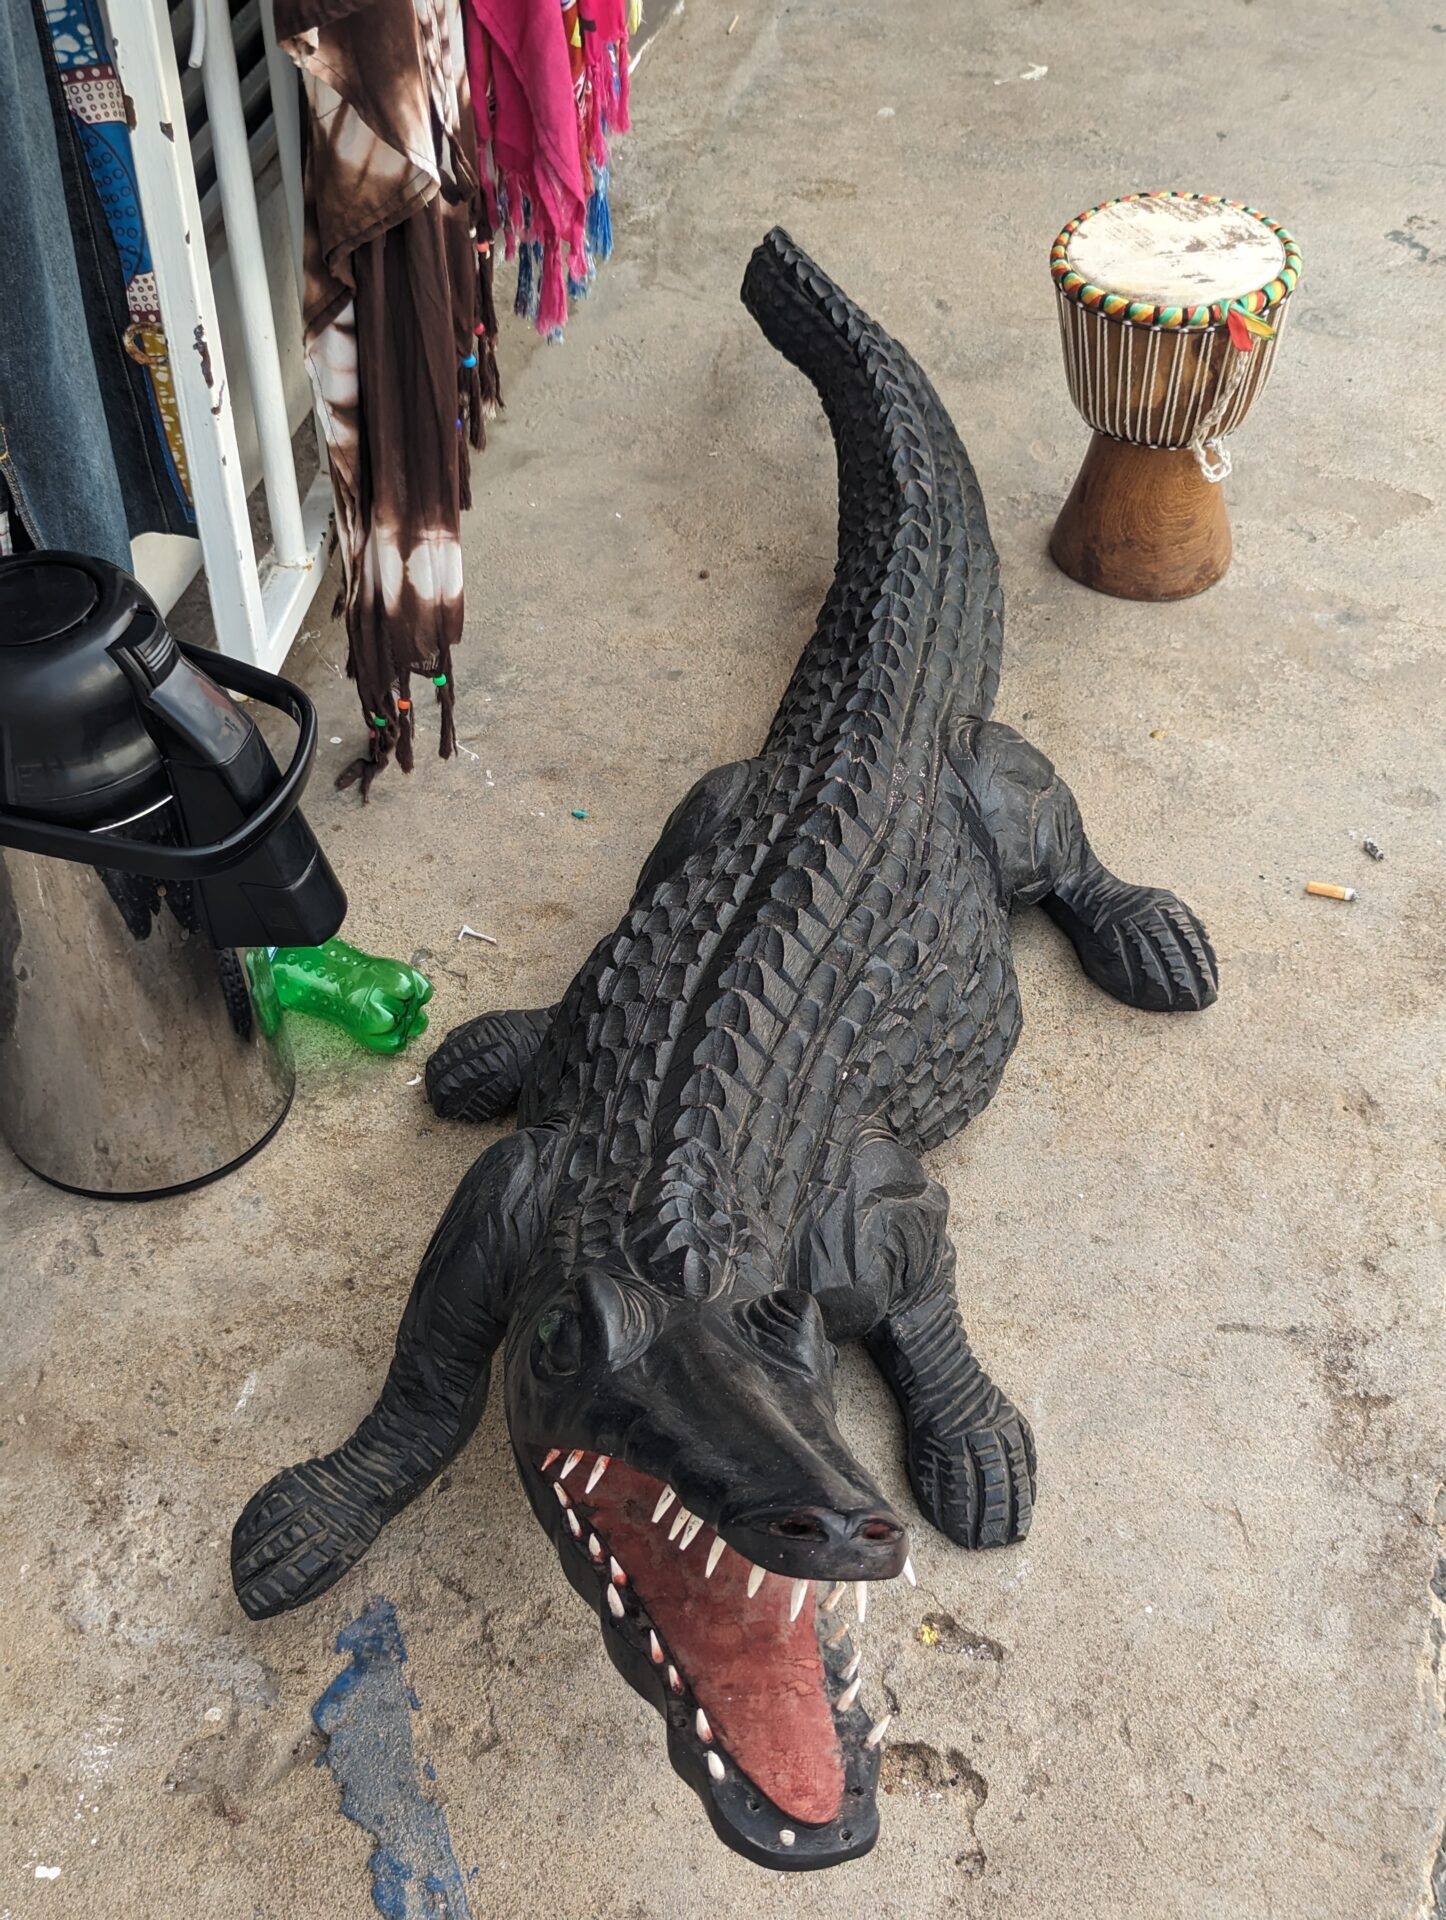 a black crocodile statue on the ground